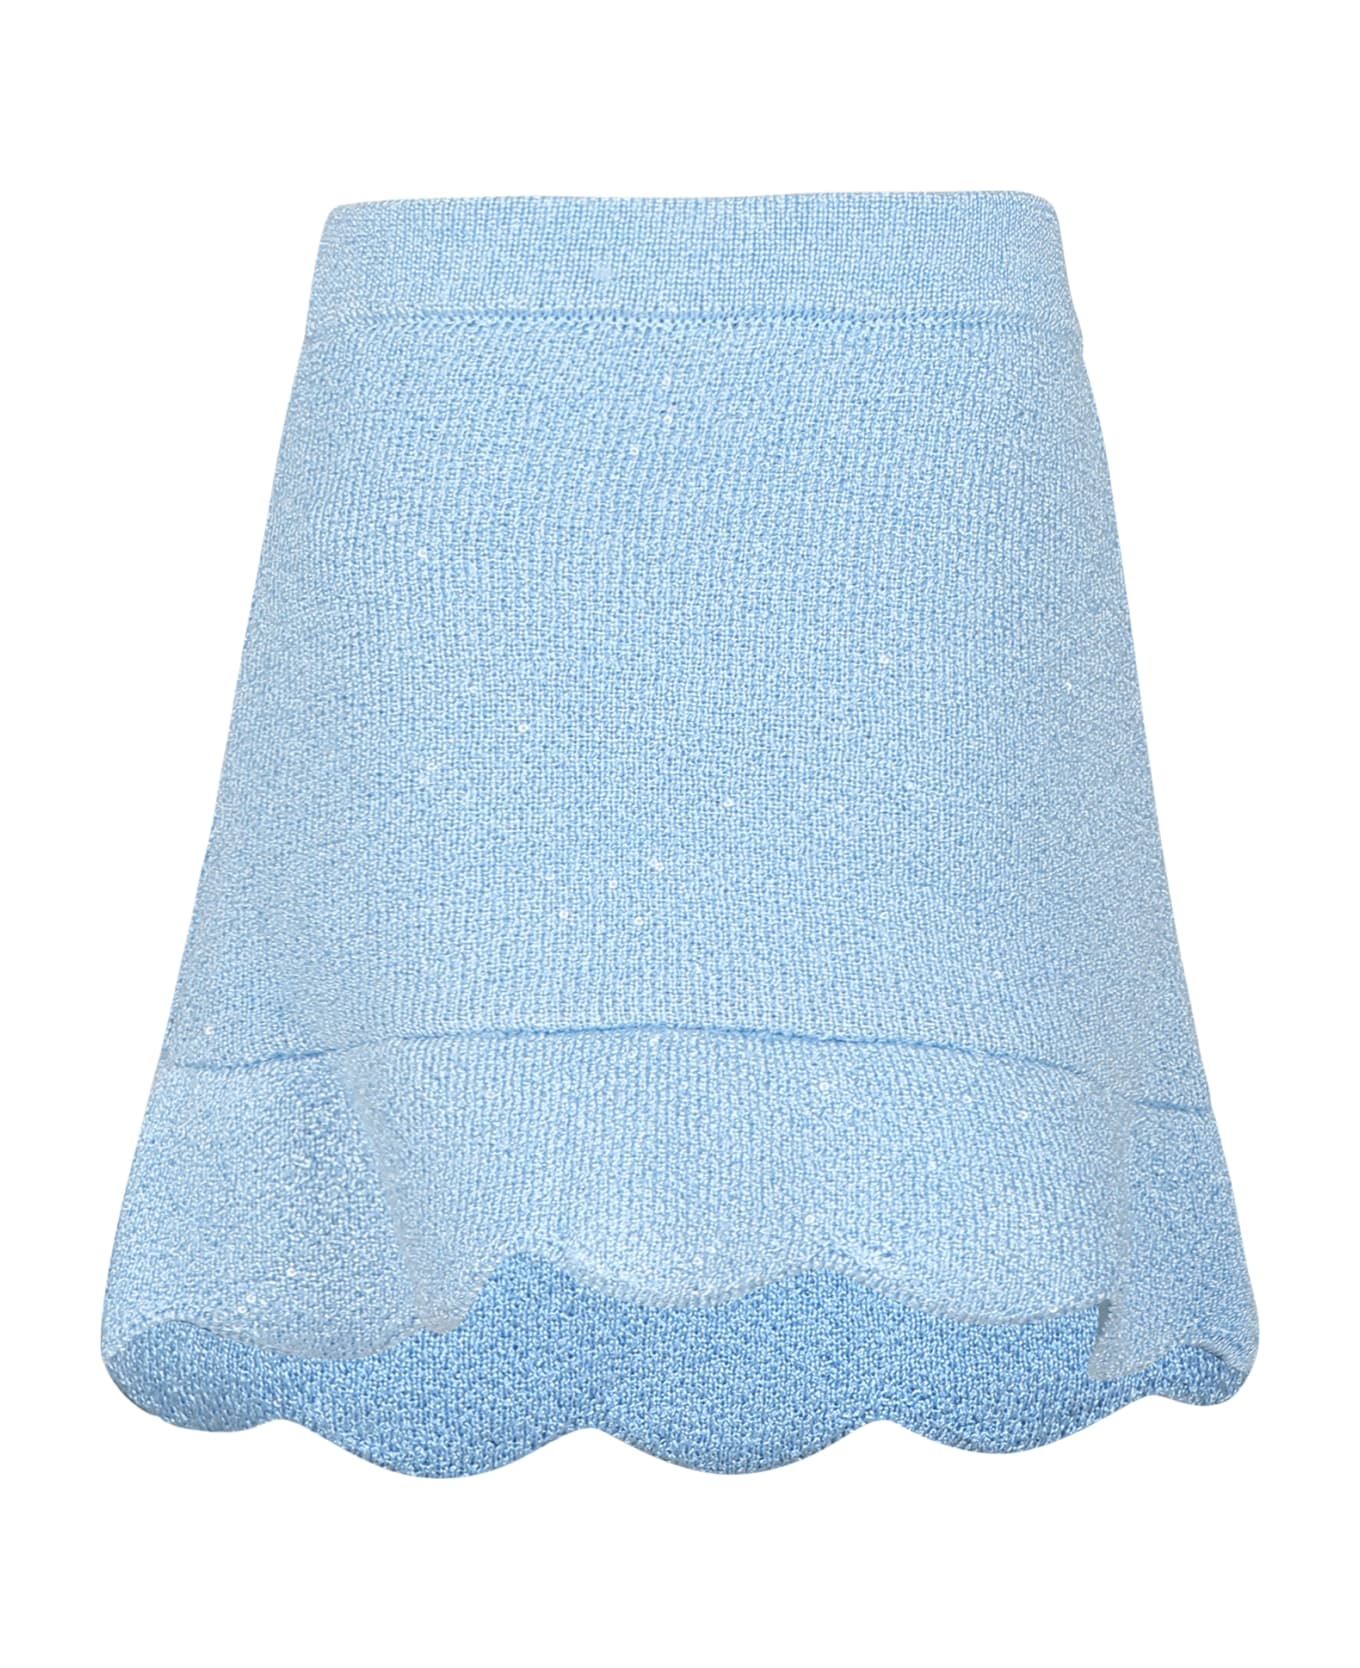 self-portrait Elegant Sky Blue Knit Skirt For Girl With Sequins - Light Blue